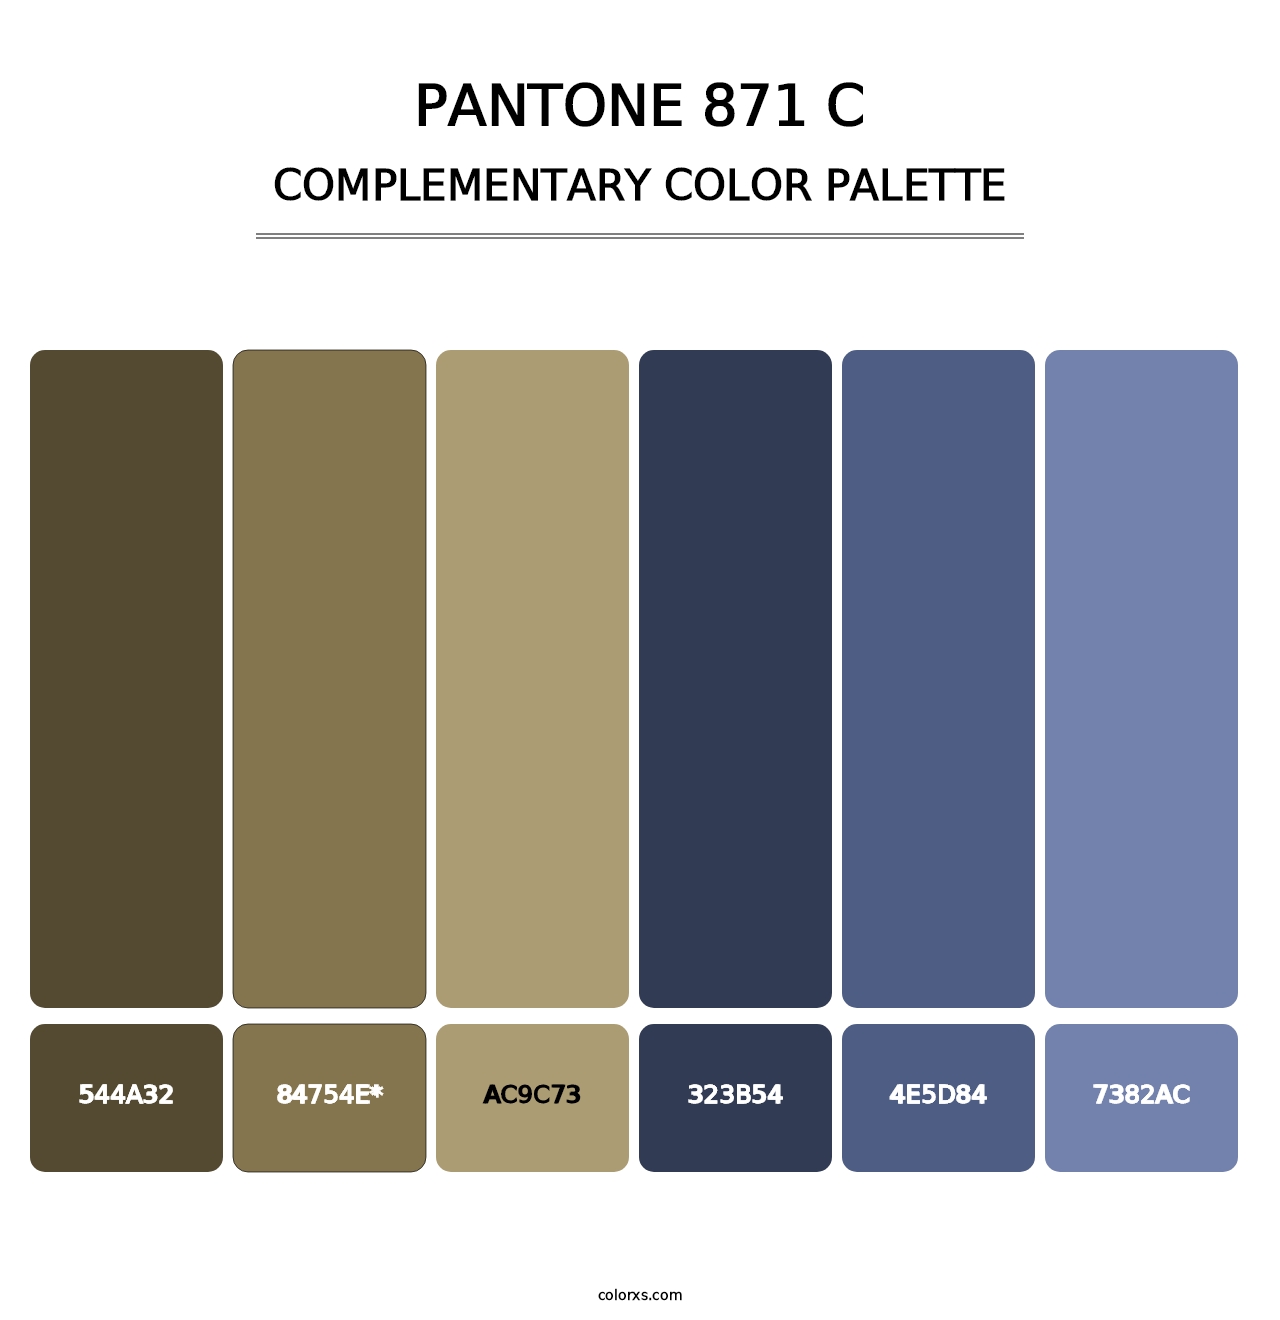 PANTONE 871 C - Complementary Color Palette